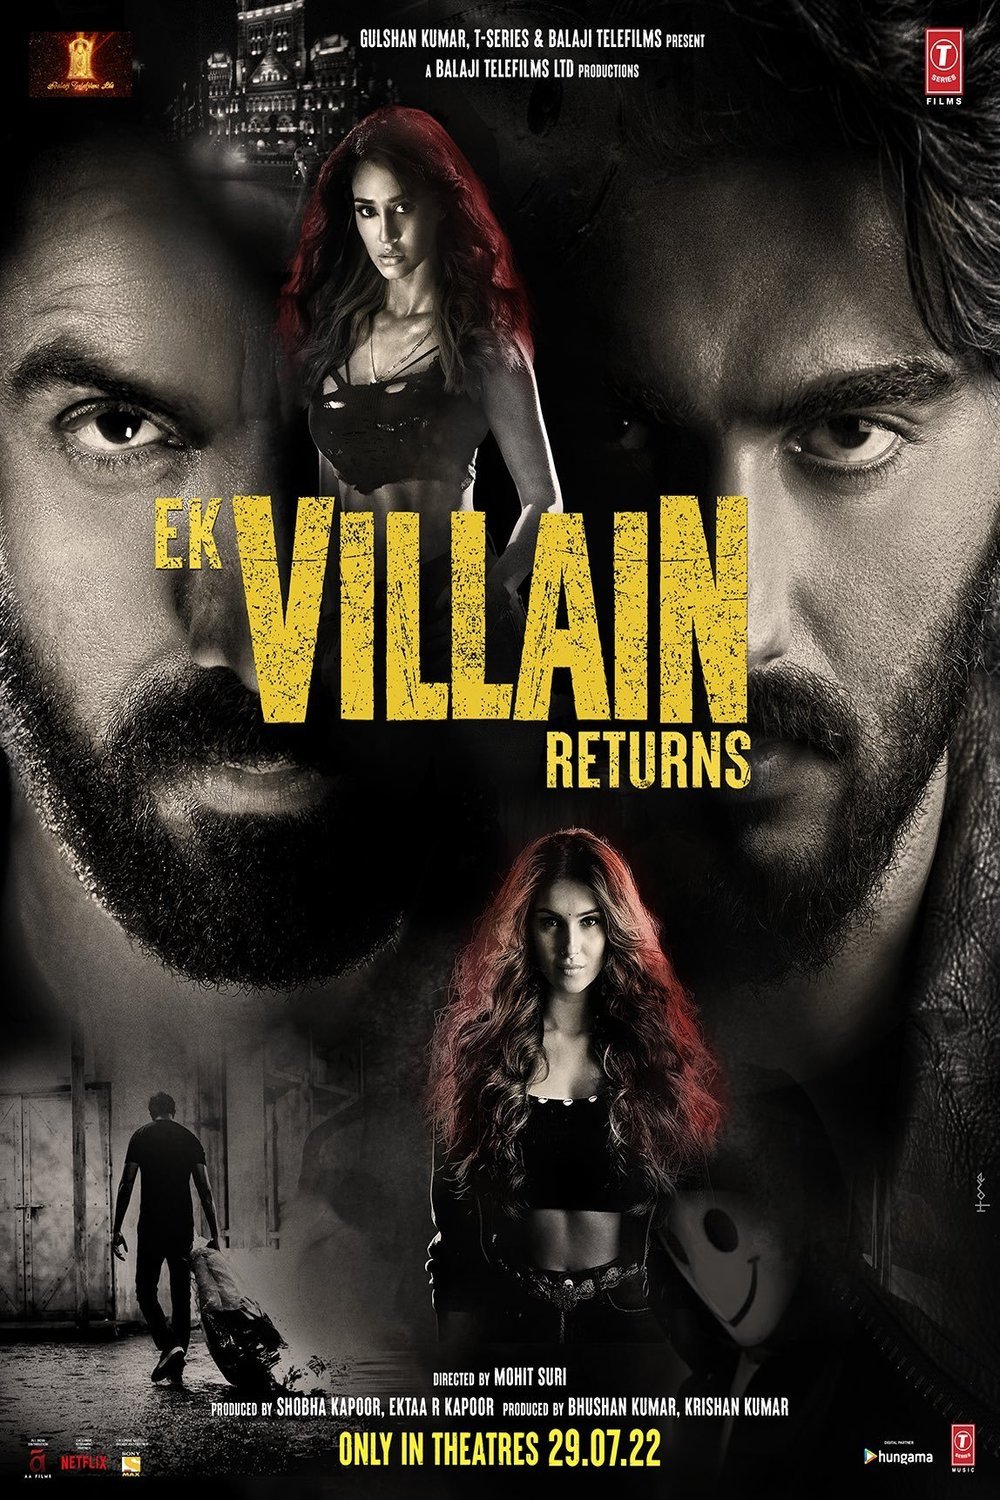 Hindi poster of the movie Ek Villain 2